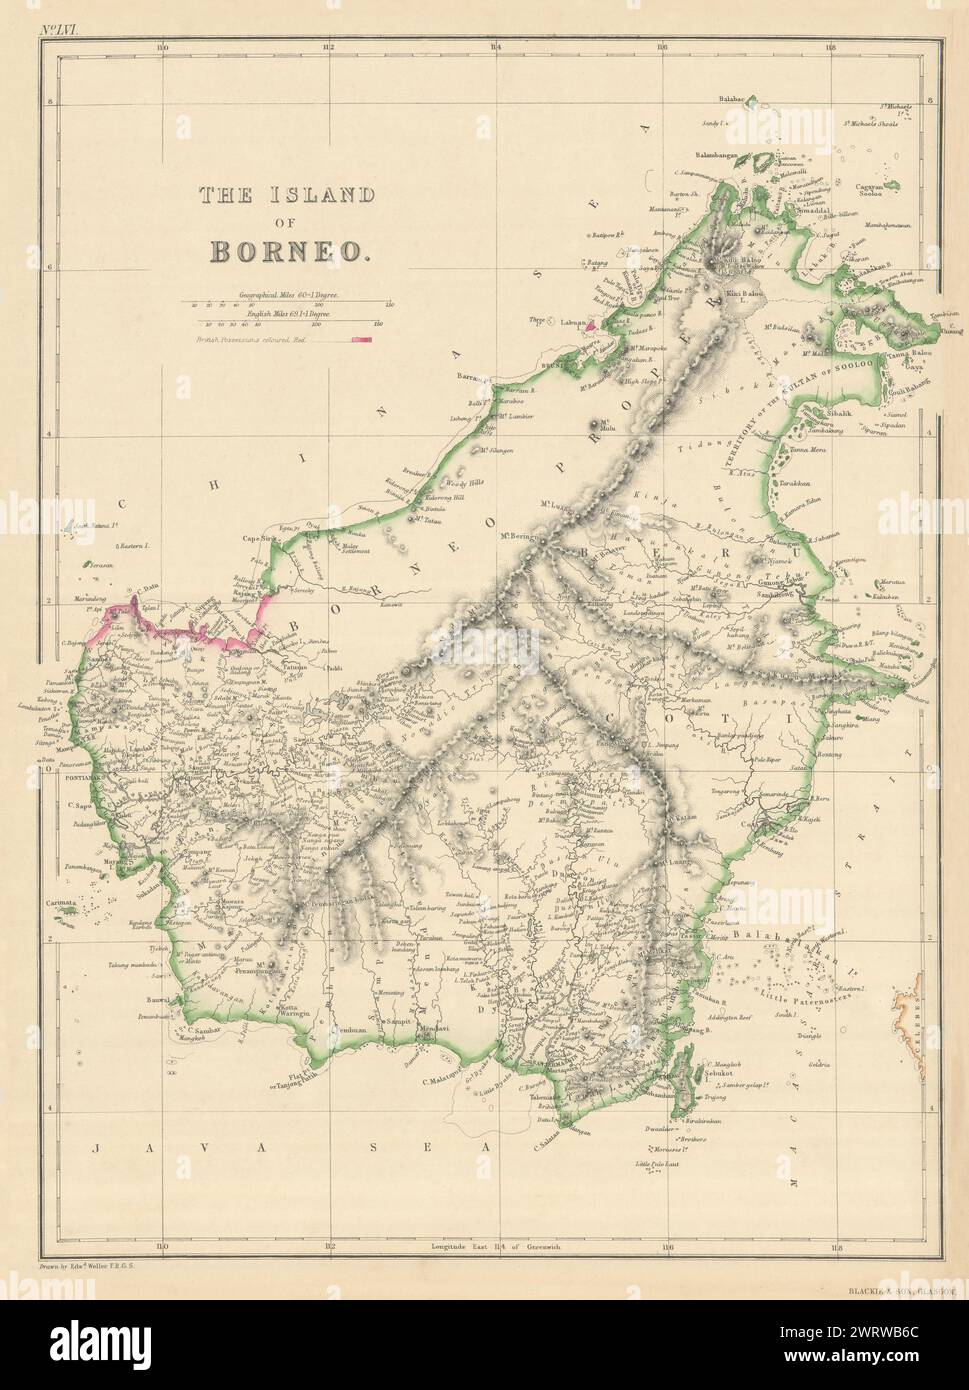 The Island of Borneo by Edward Weller. Sarawak Sabah Brunei Kalimantan 1860 map Stock Photo